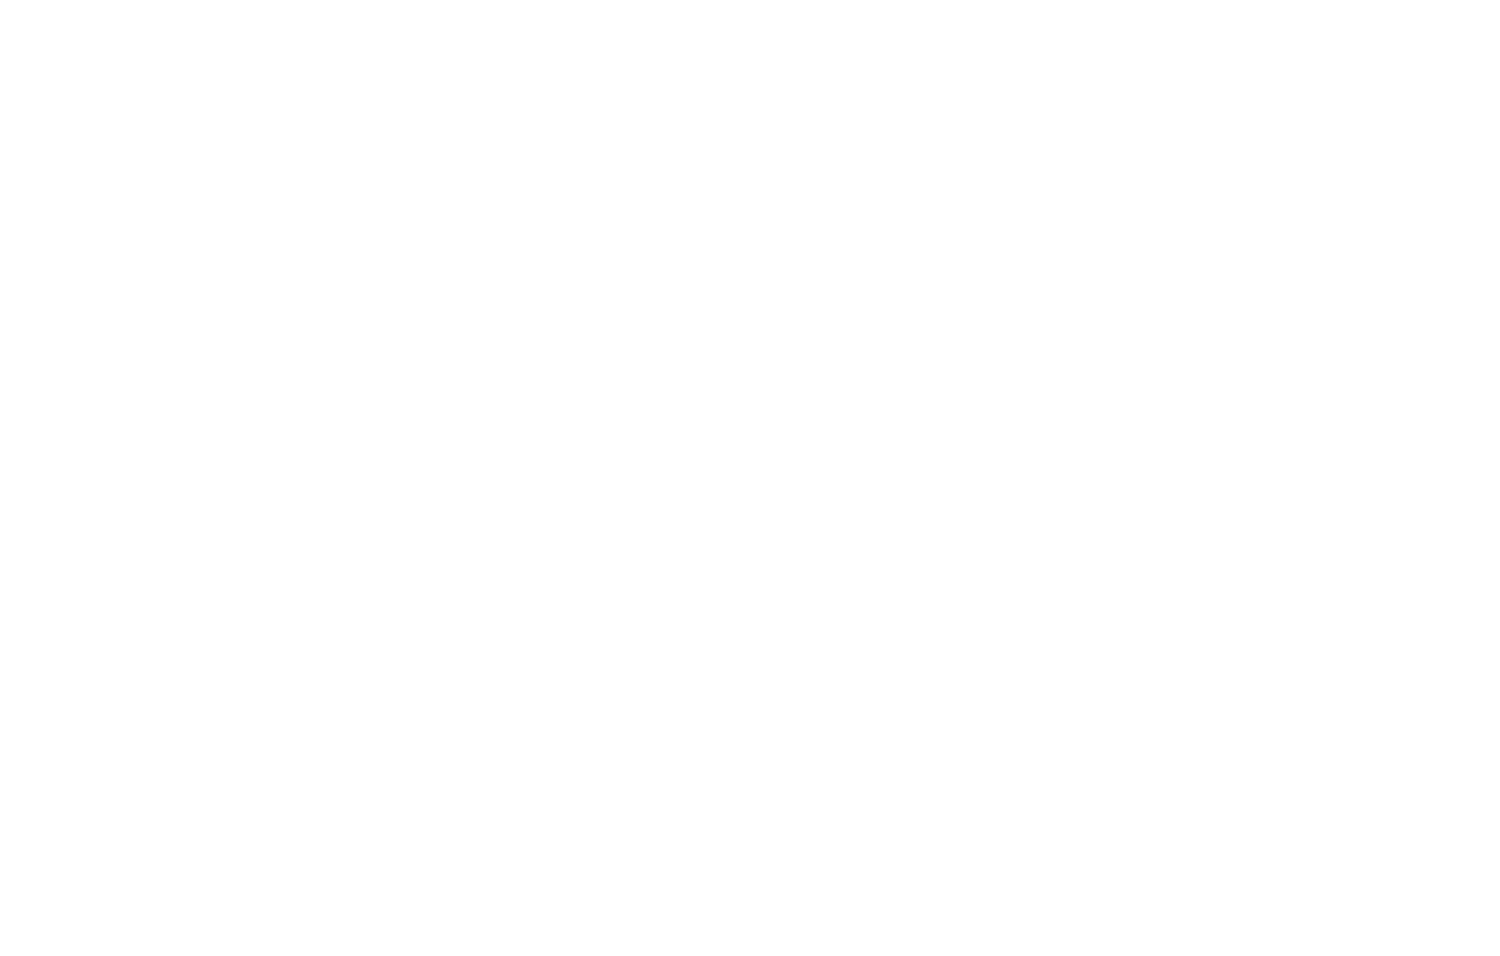 CAMDEN